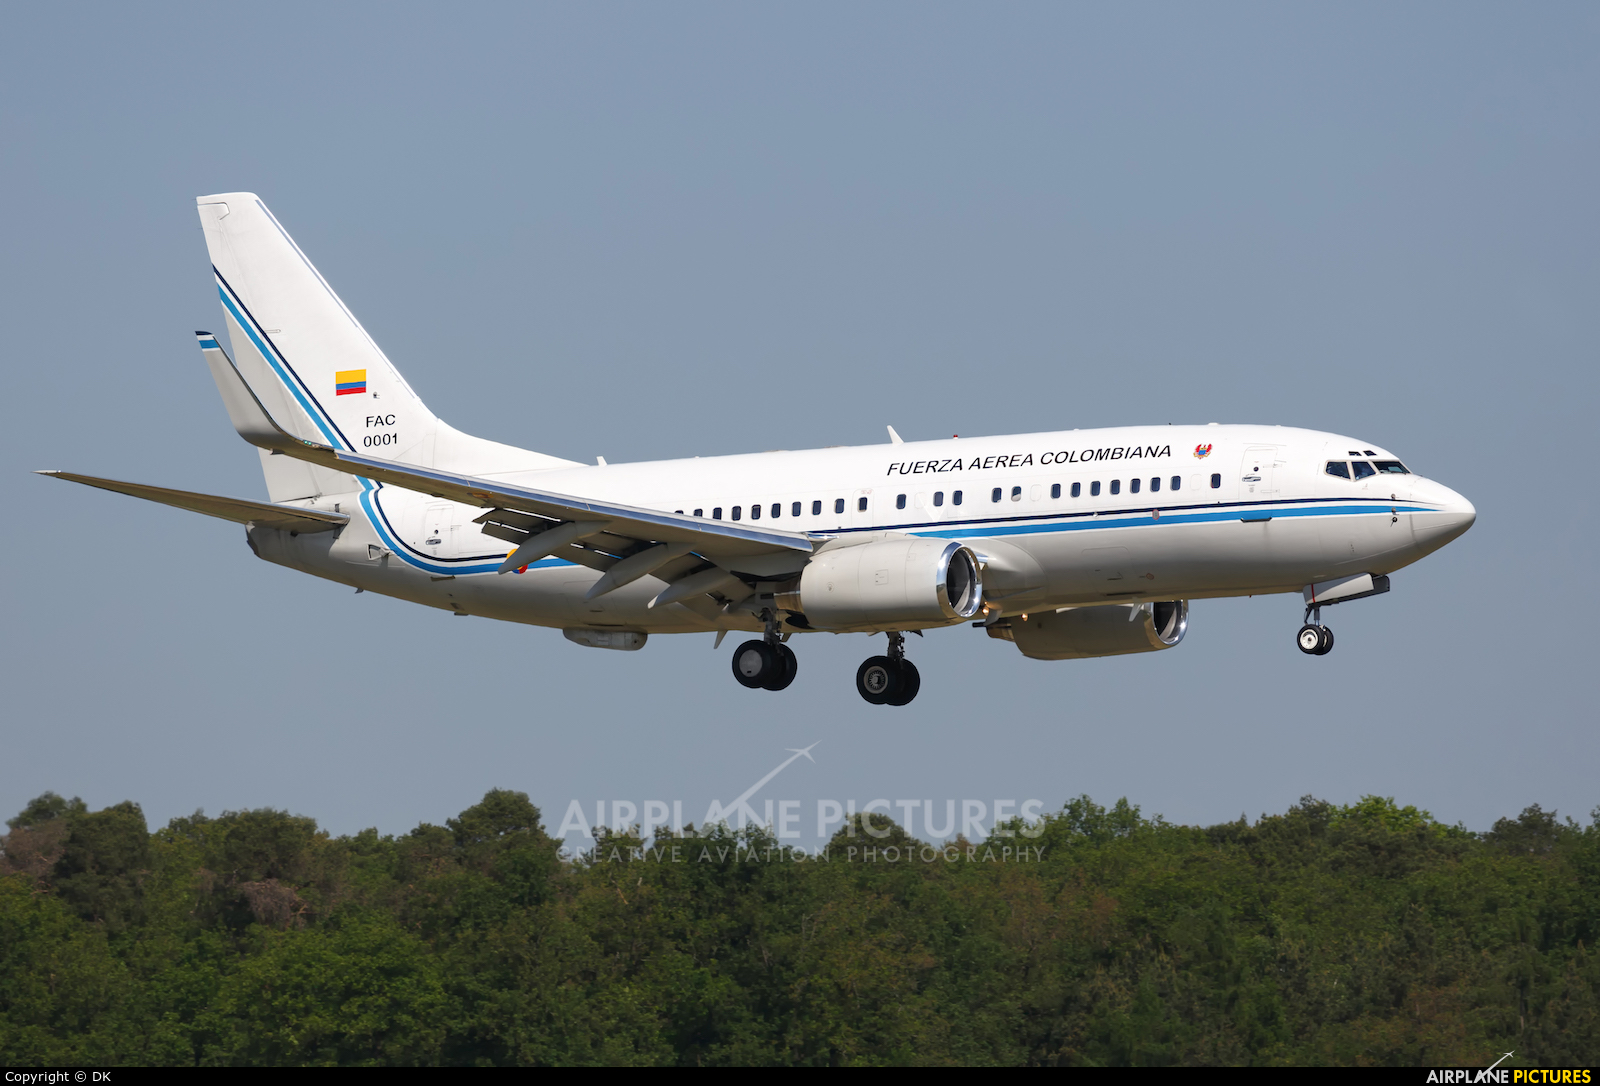 Colombia - Air Force FAC0001 aircraft at Berlin - Tegel